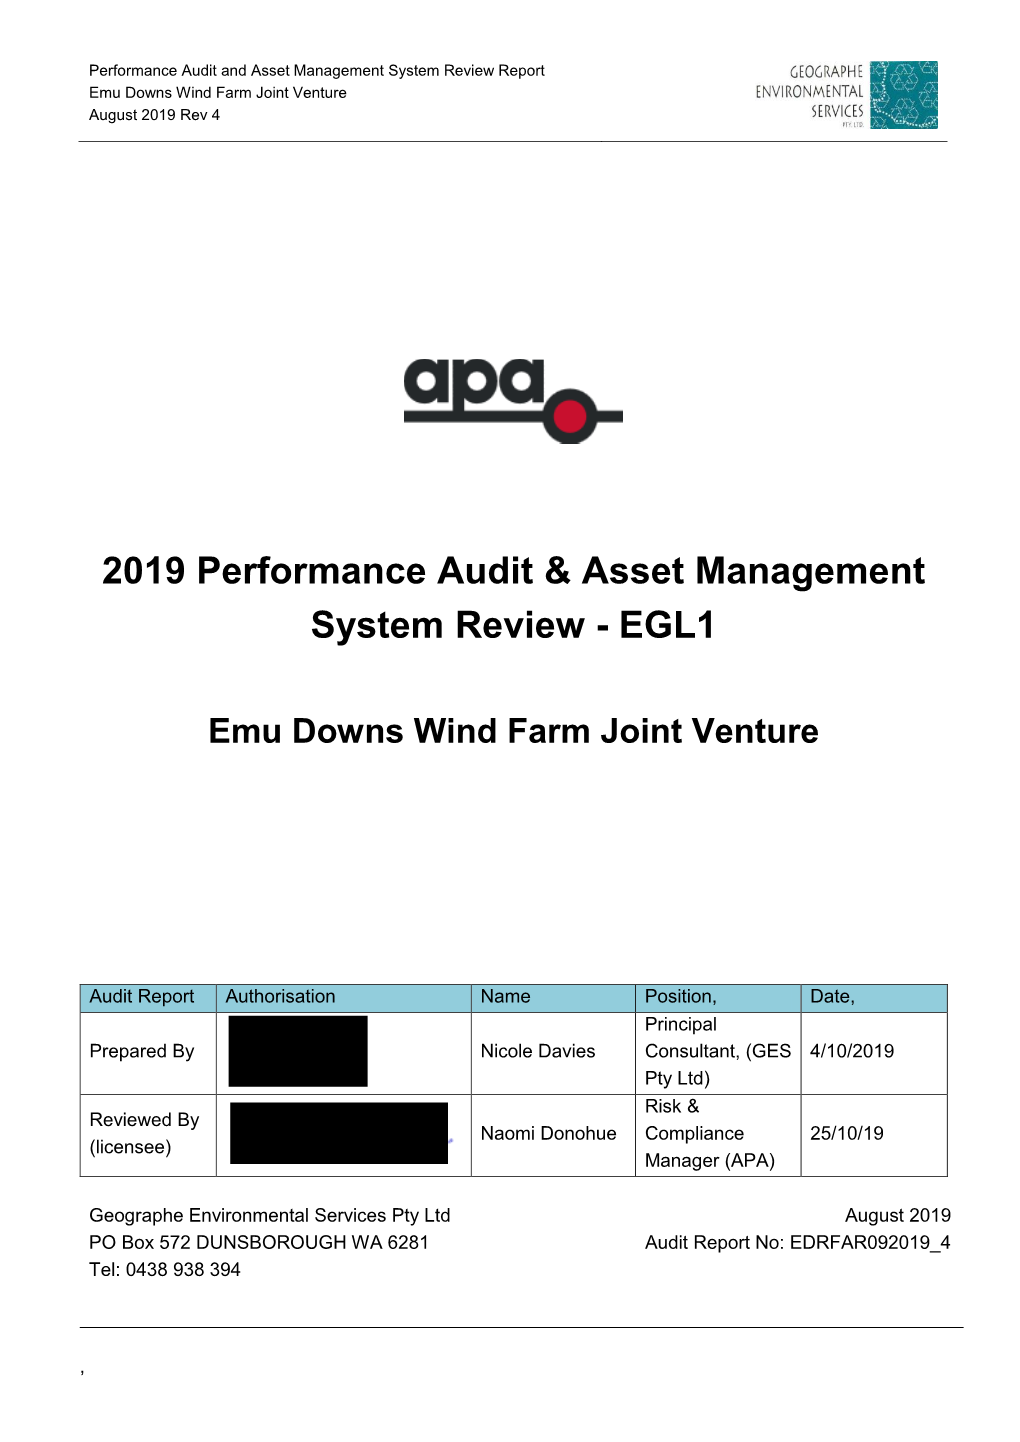 2019 Performance Audit & Asset Management System Review